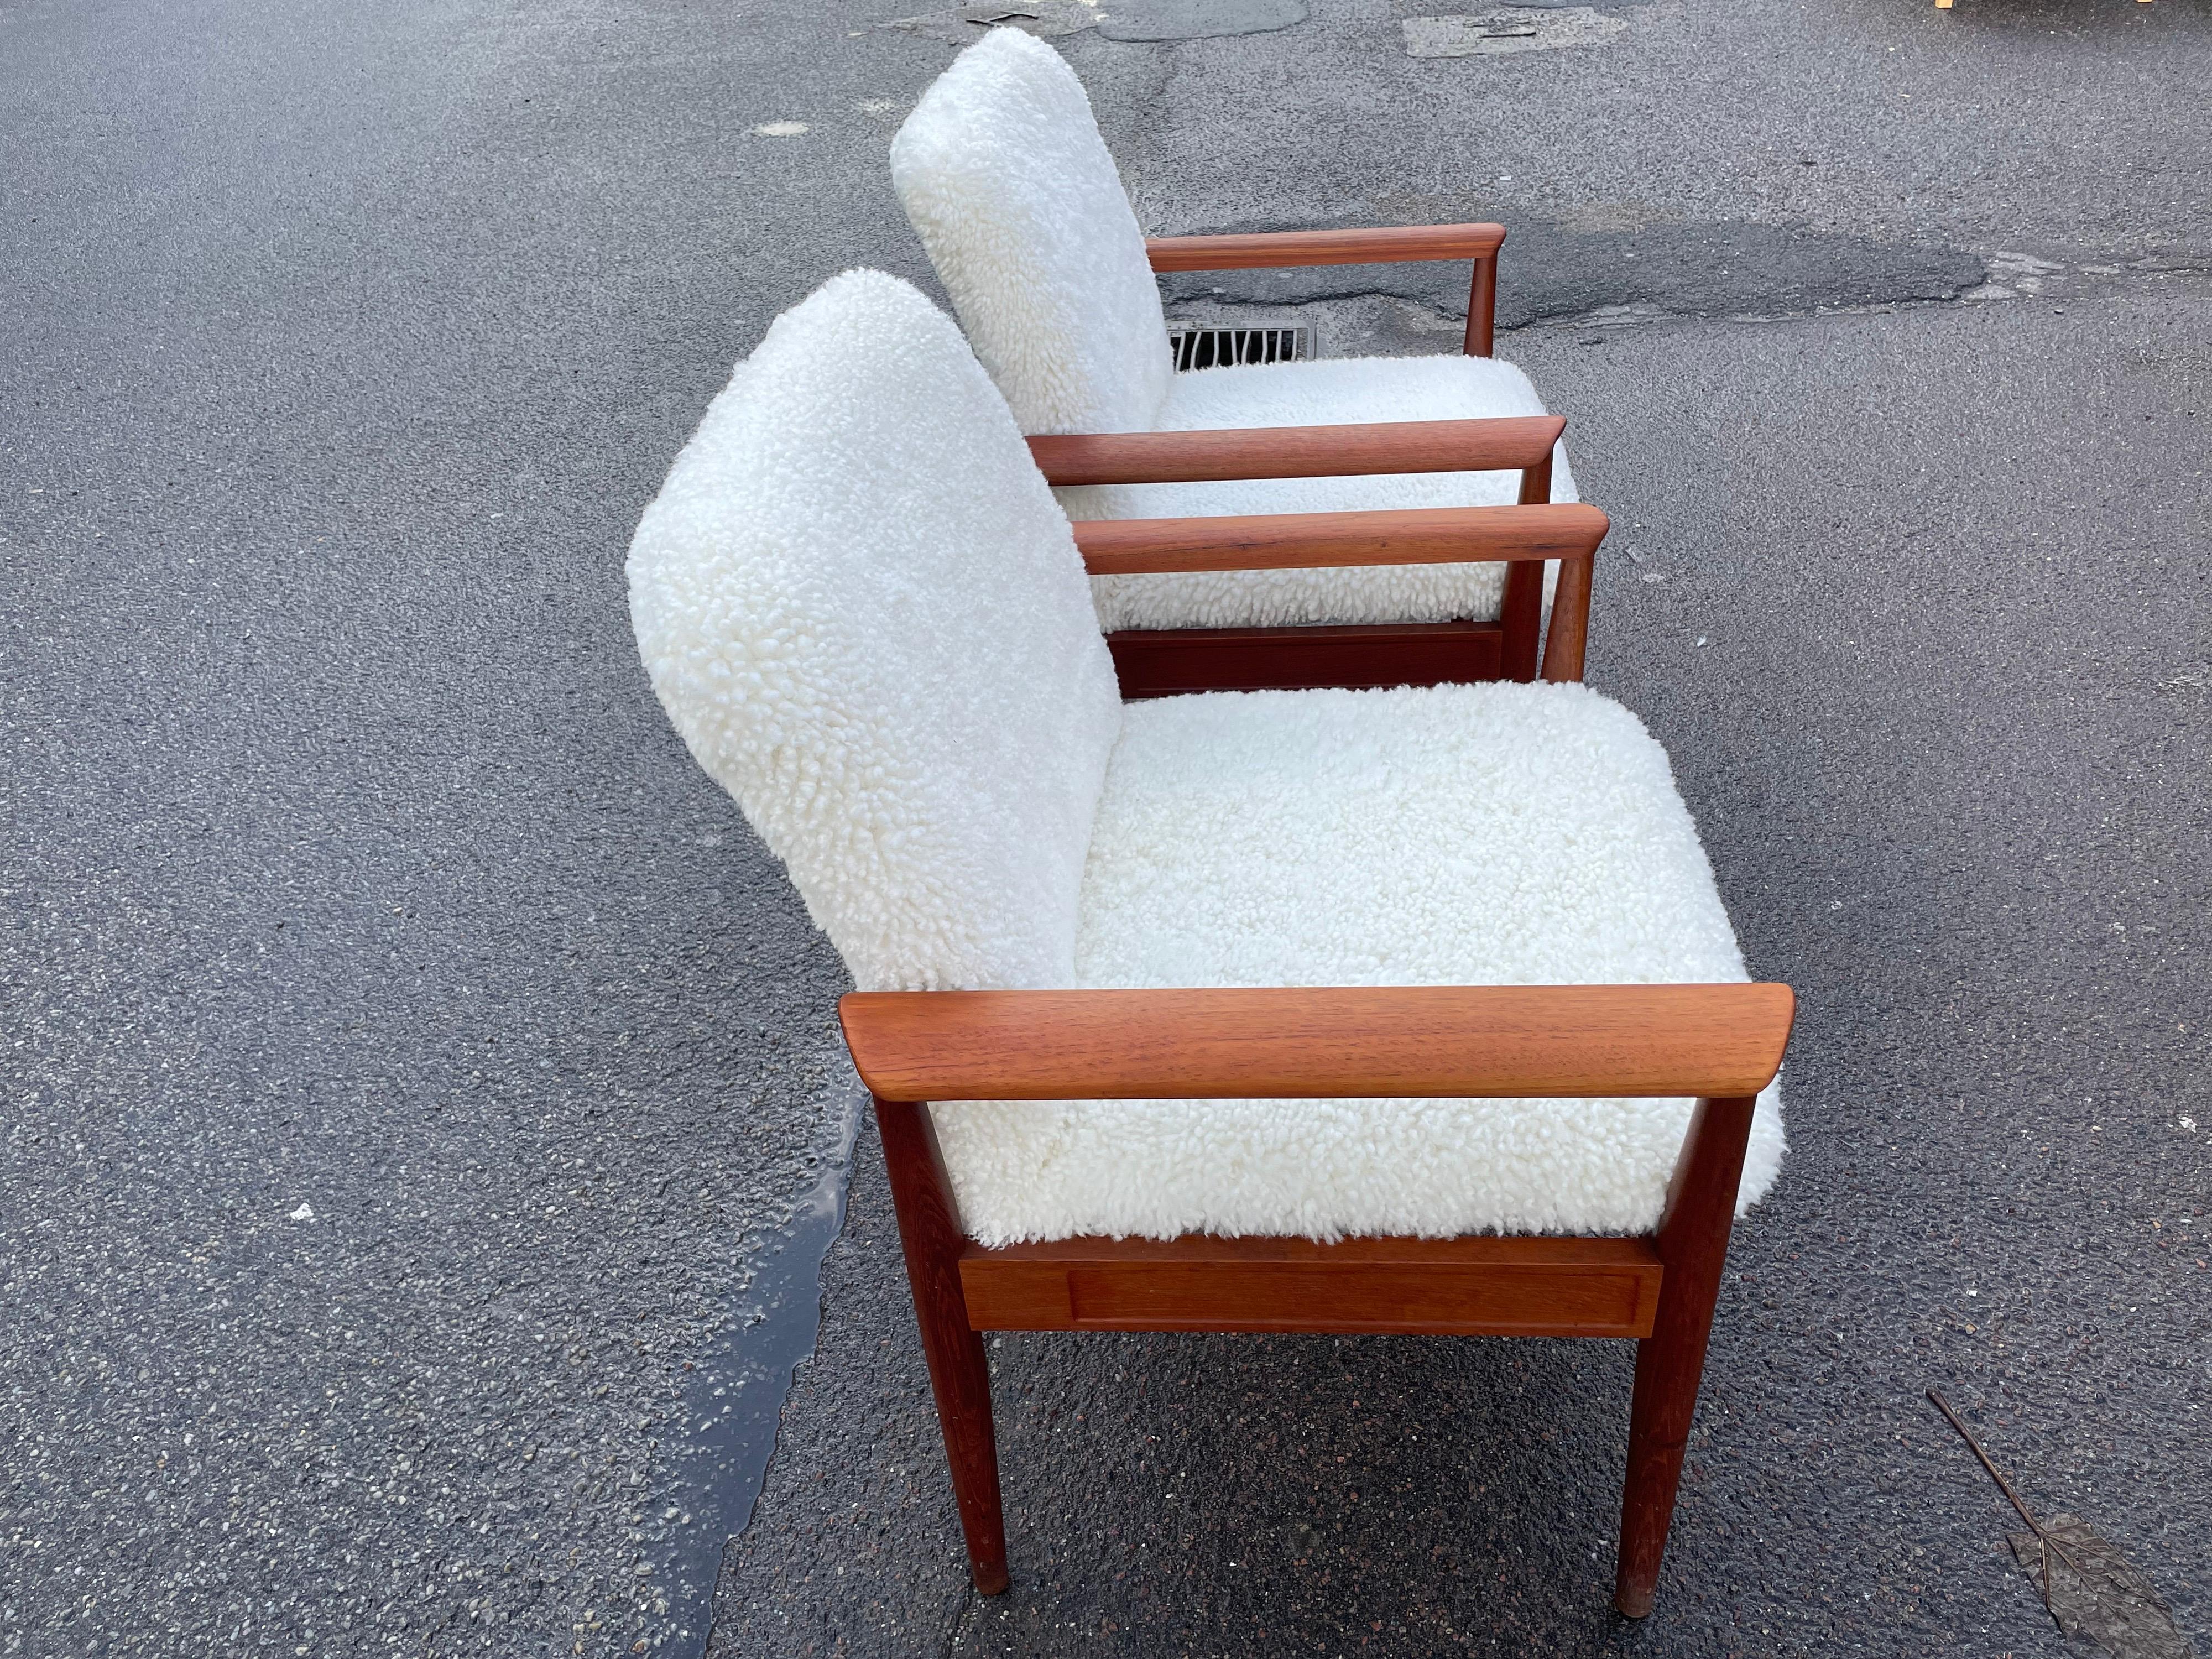 Finn Juhl, diplomat desk chair or armchair with frame in teak, model 209. Designed in 1963. Produced by France & Son.